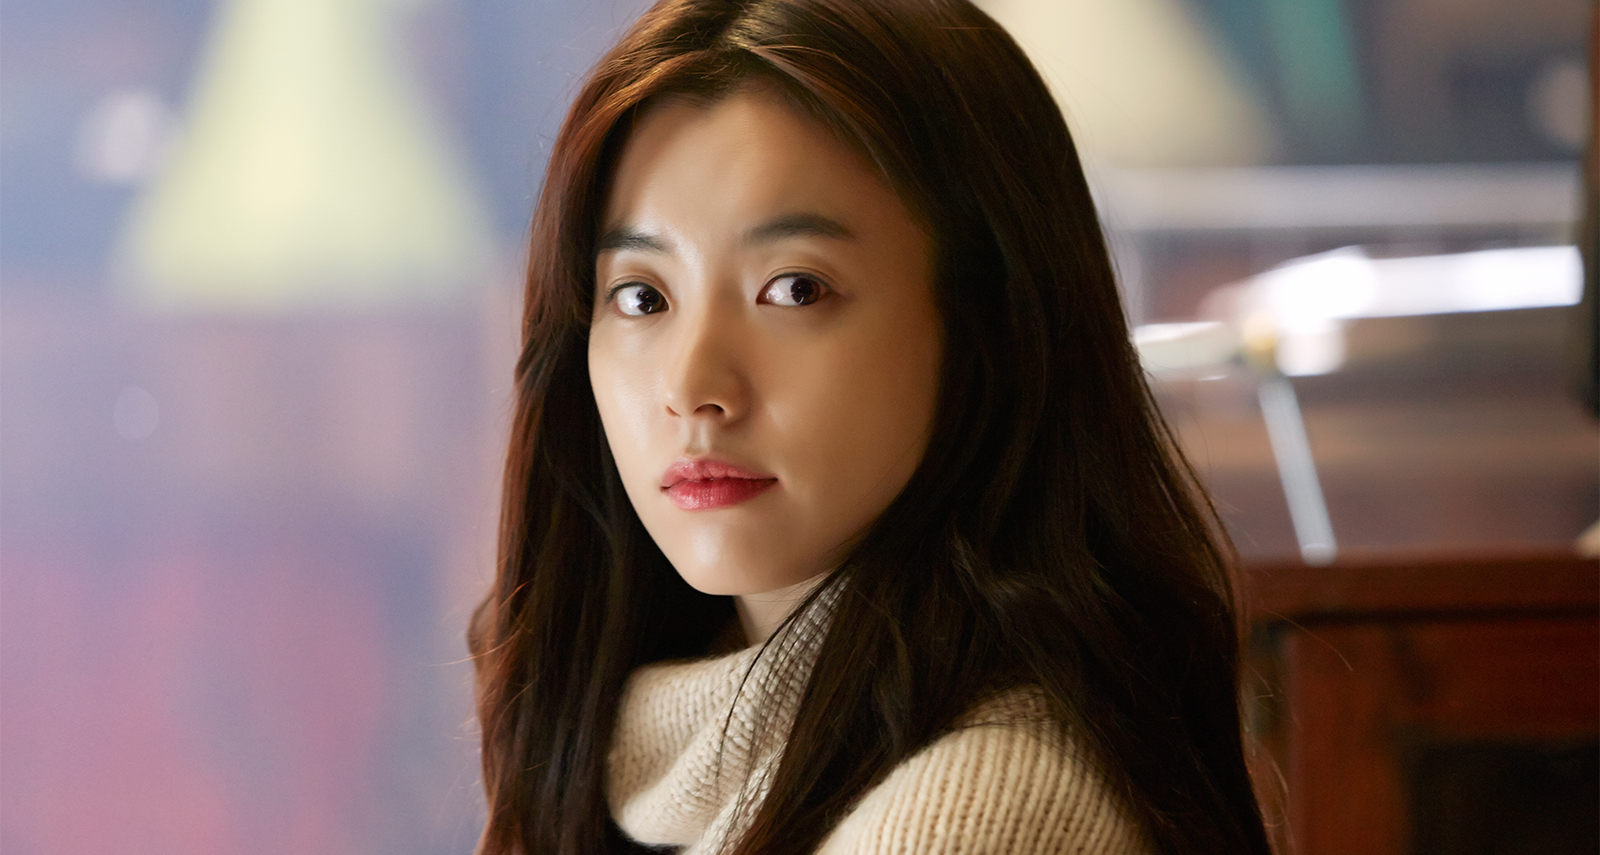 People 1600x855 Han HyoJoo South Korea actress Asian women brunette long hair